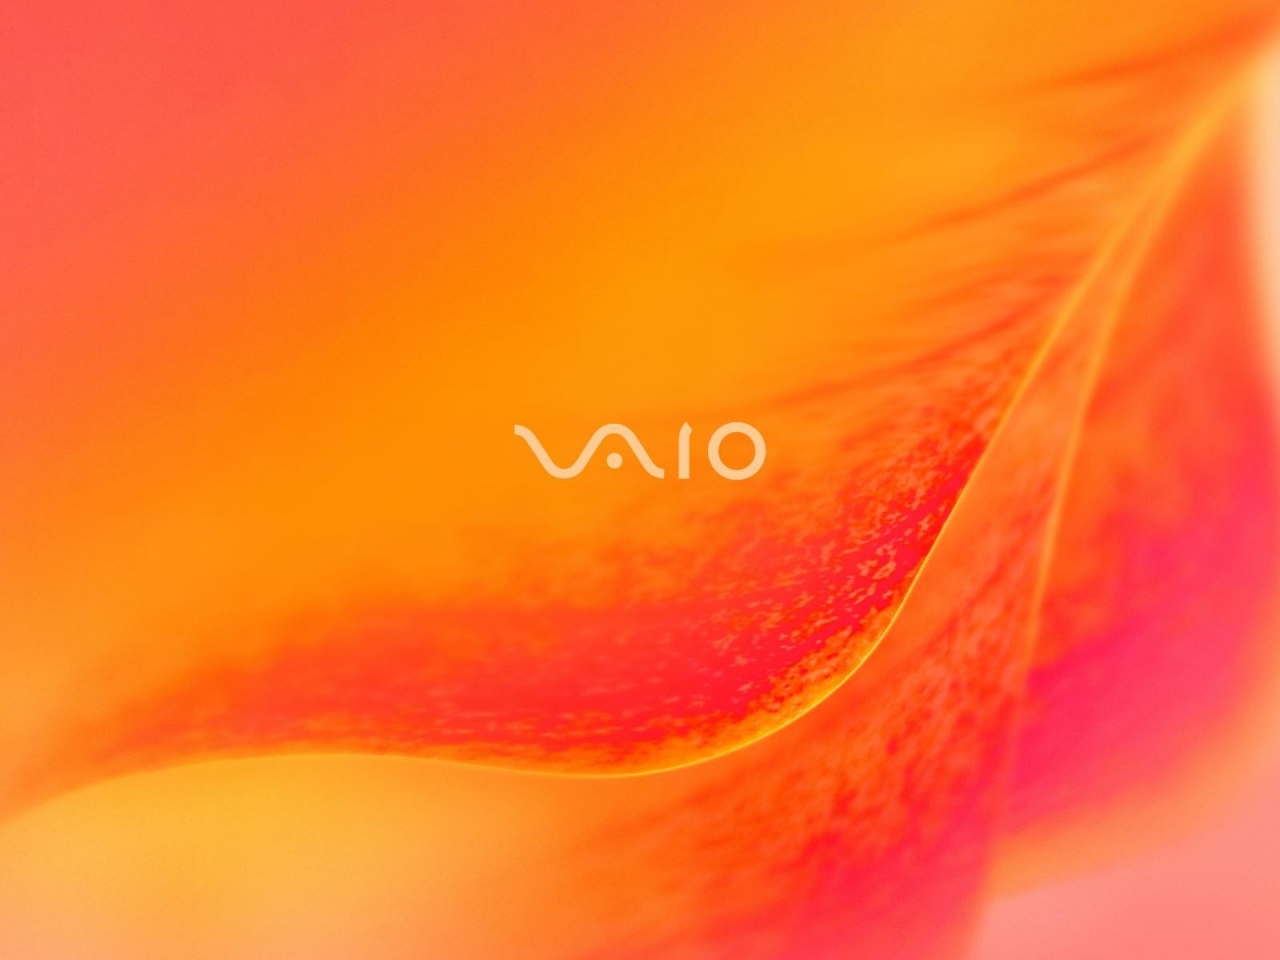 Sony Vaio Orange blossom for 1280 x 960 resolution